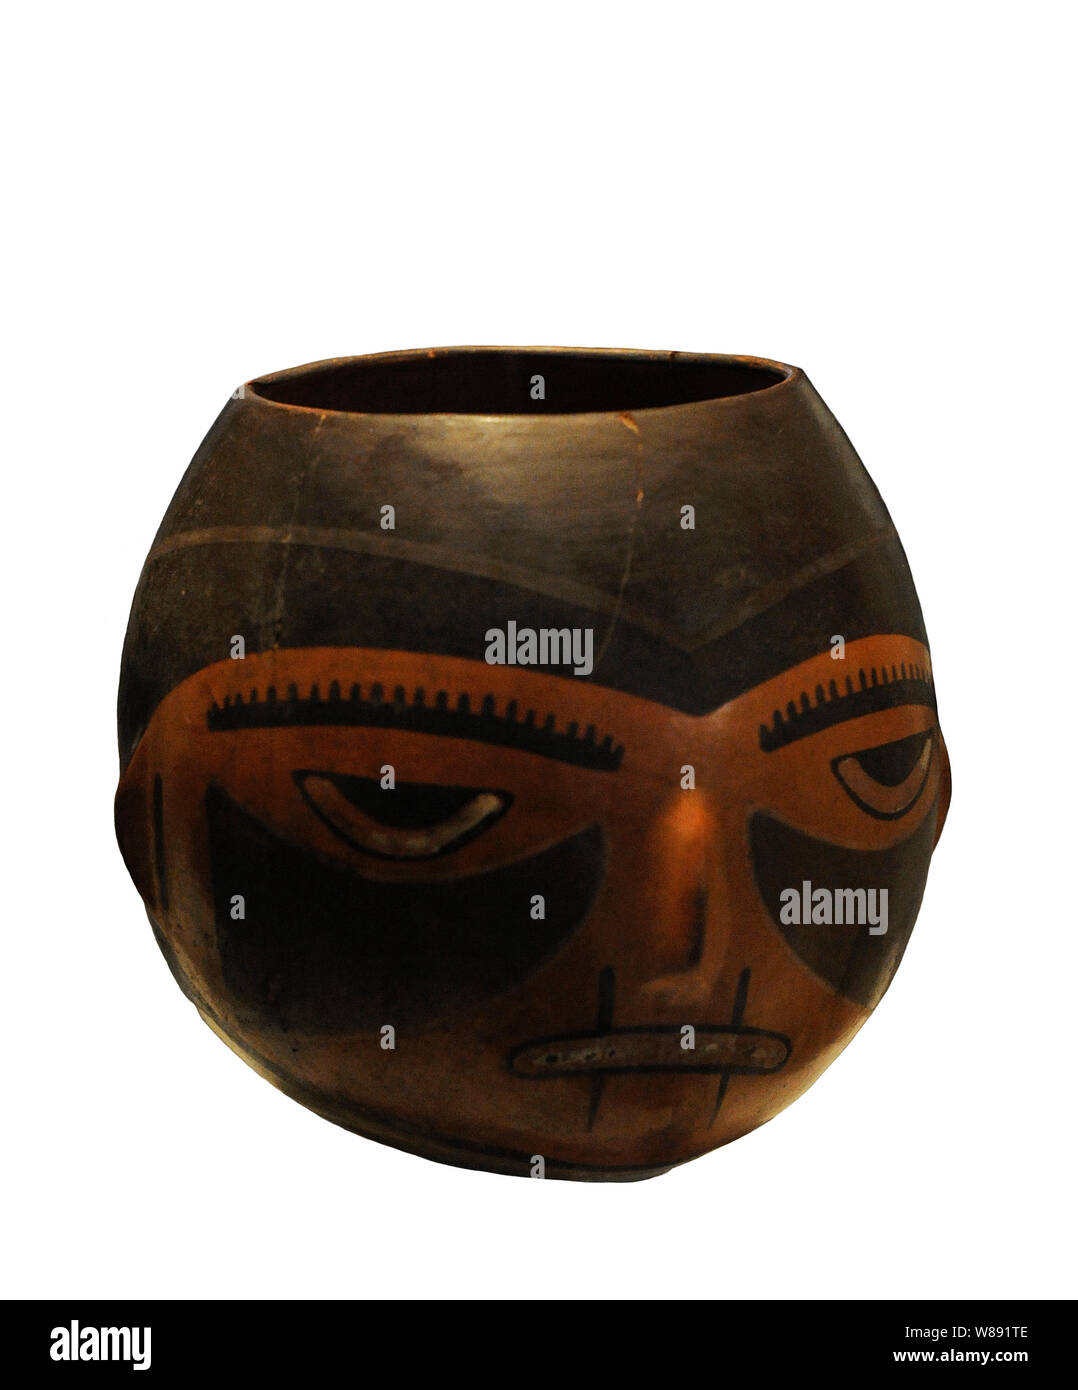 Trophy Kopf geformt. Keramik. Nazca Kultur (100 v. Chr.-700 v. Chr.). Anfang der Mittelstufe. Peru. Museum des Amerikas. Madrid, Spanien. Stockfoto